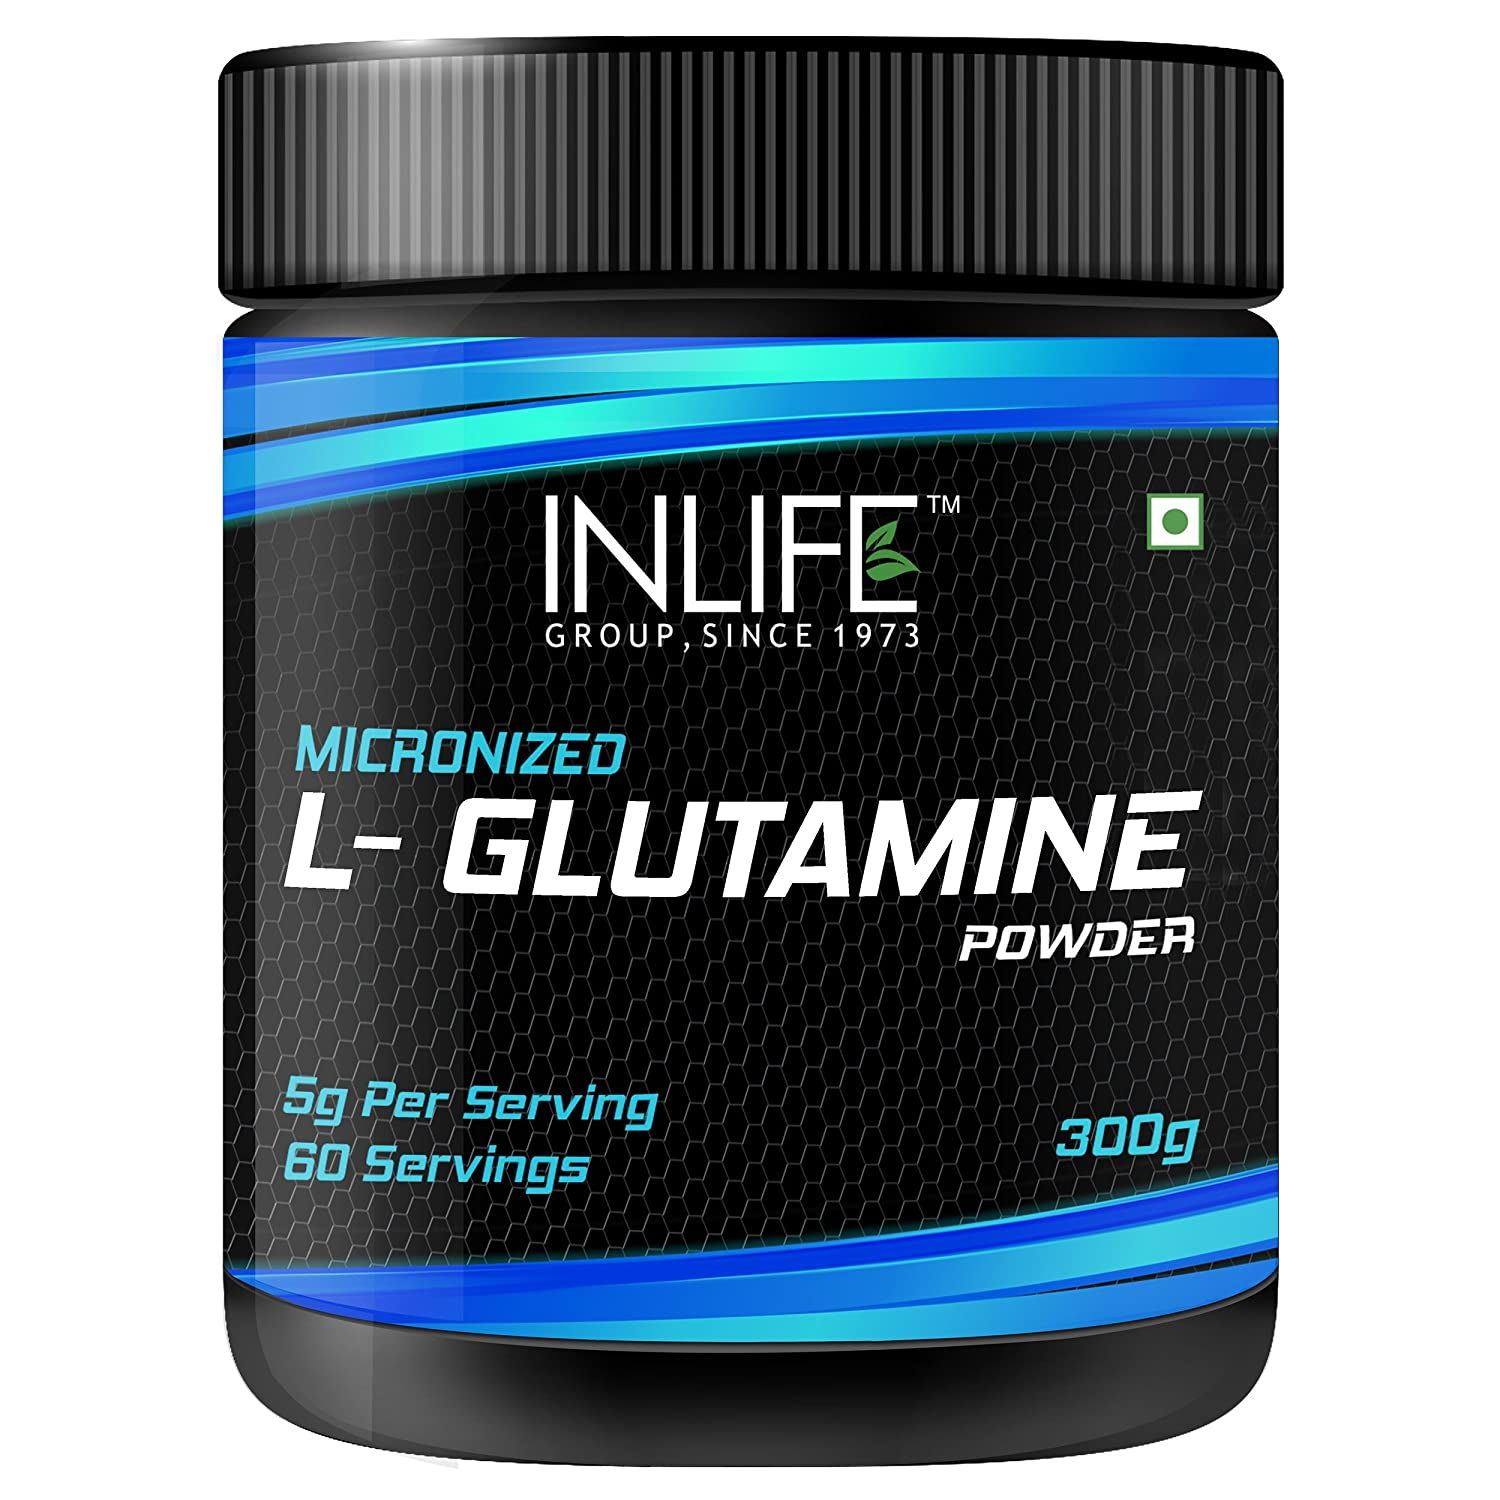 Inlife Micronized L Glutamine Powder Image